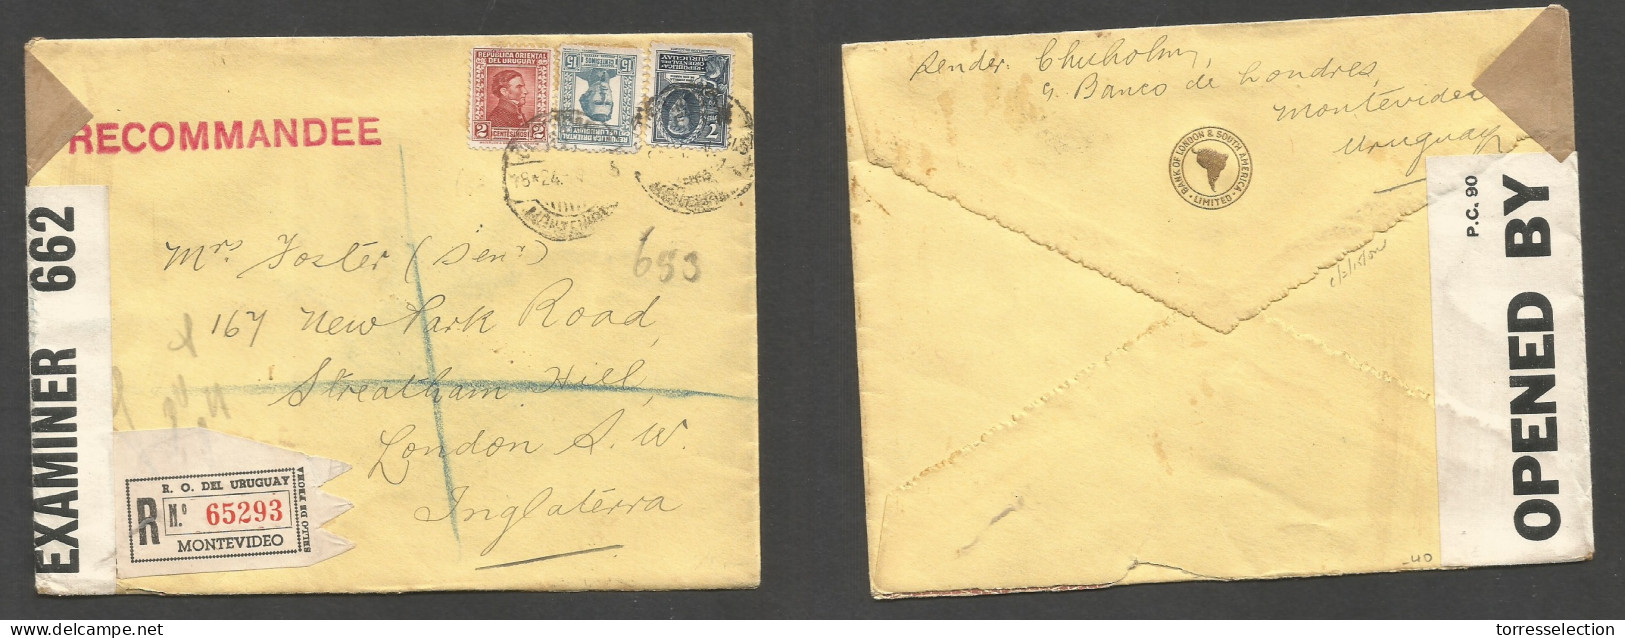 URUGUAY. 1945 (24 Febr) Mont - UK, London. Registered Multifkd WWII Censored Envelope. Fine Tricolor Usage. XSALE. - Uruguay